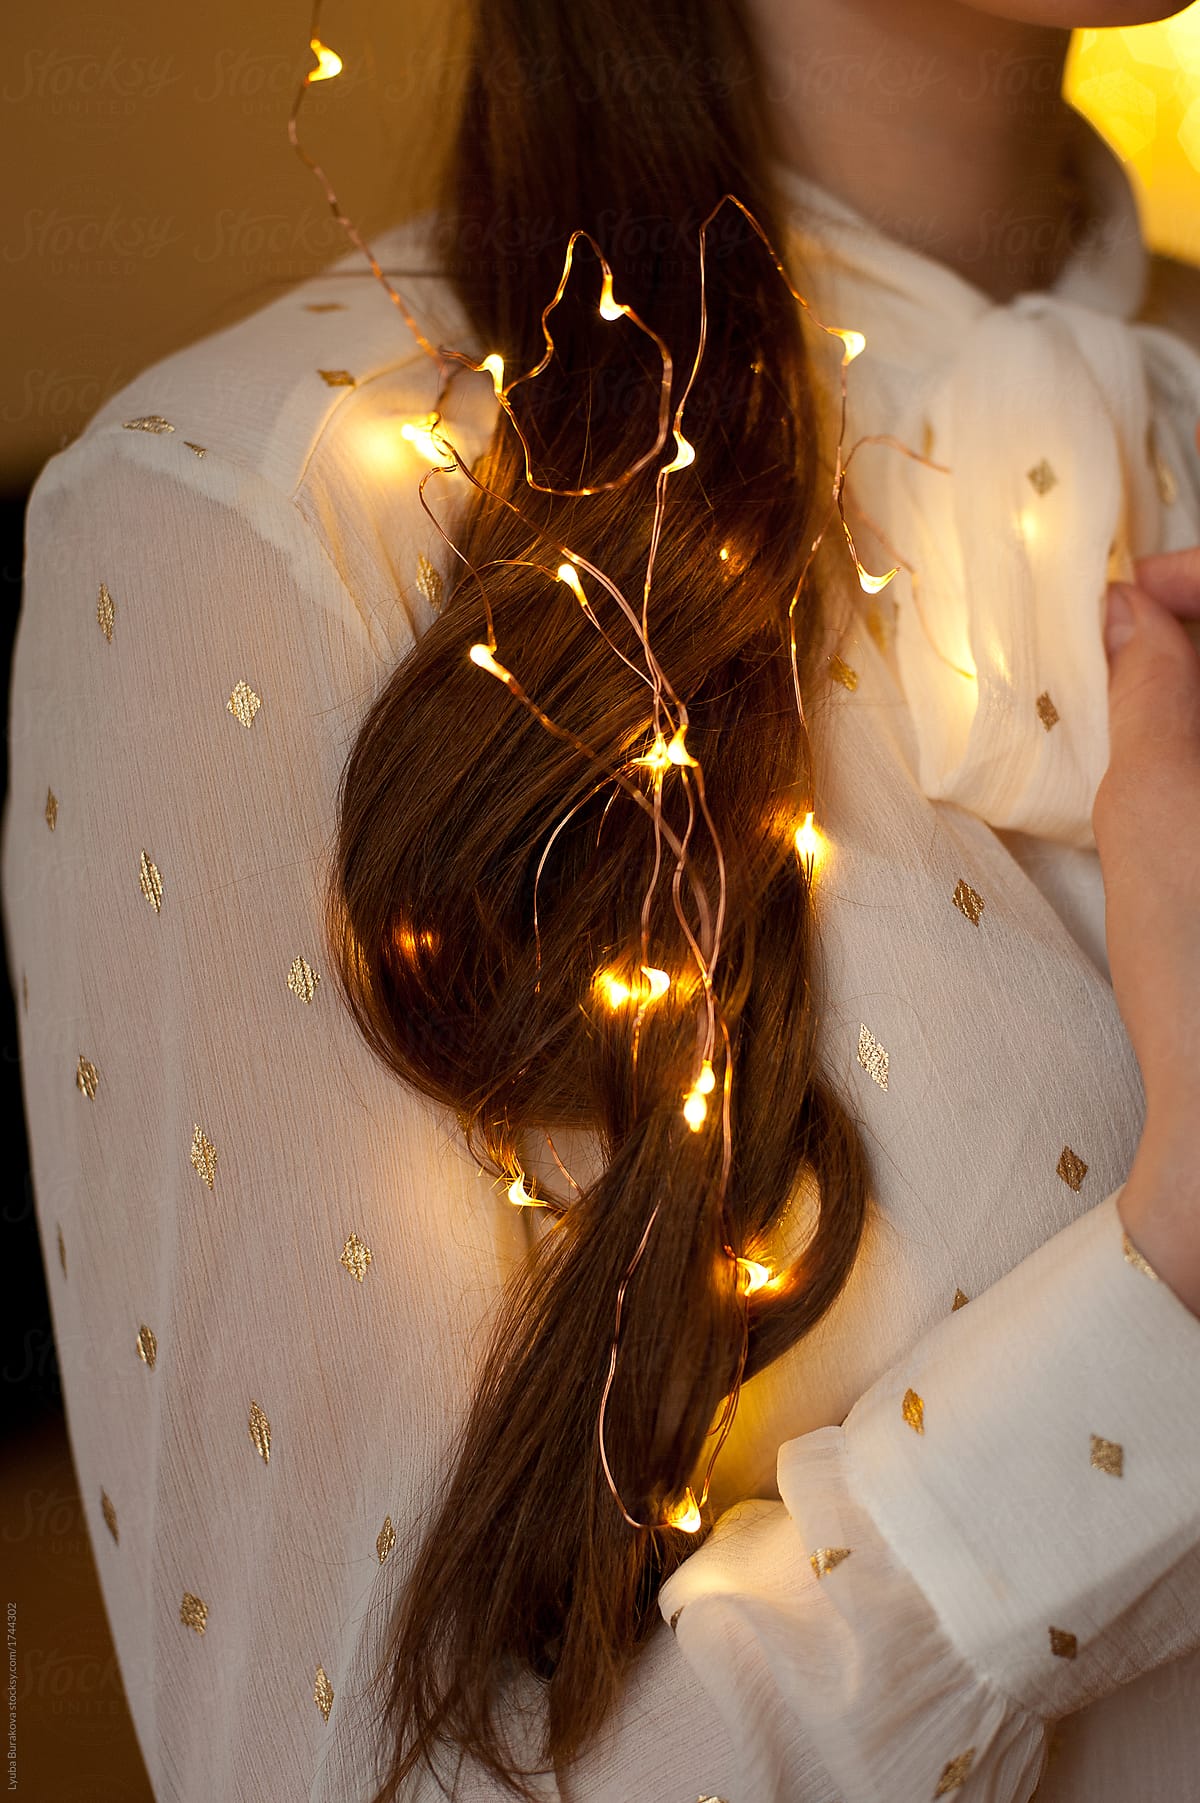 Lights Woven Into Long Hair Del Colaborador De Stocksy Amor Burakova Stocksy 